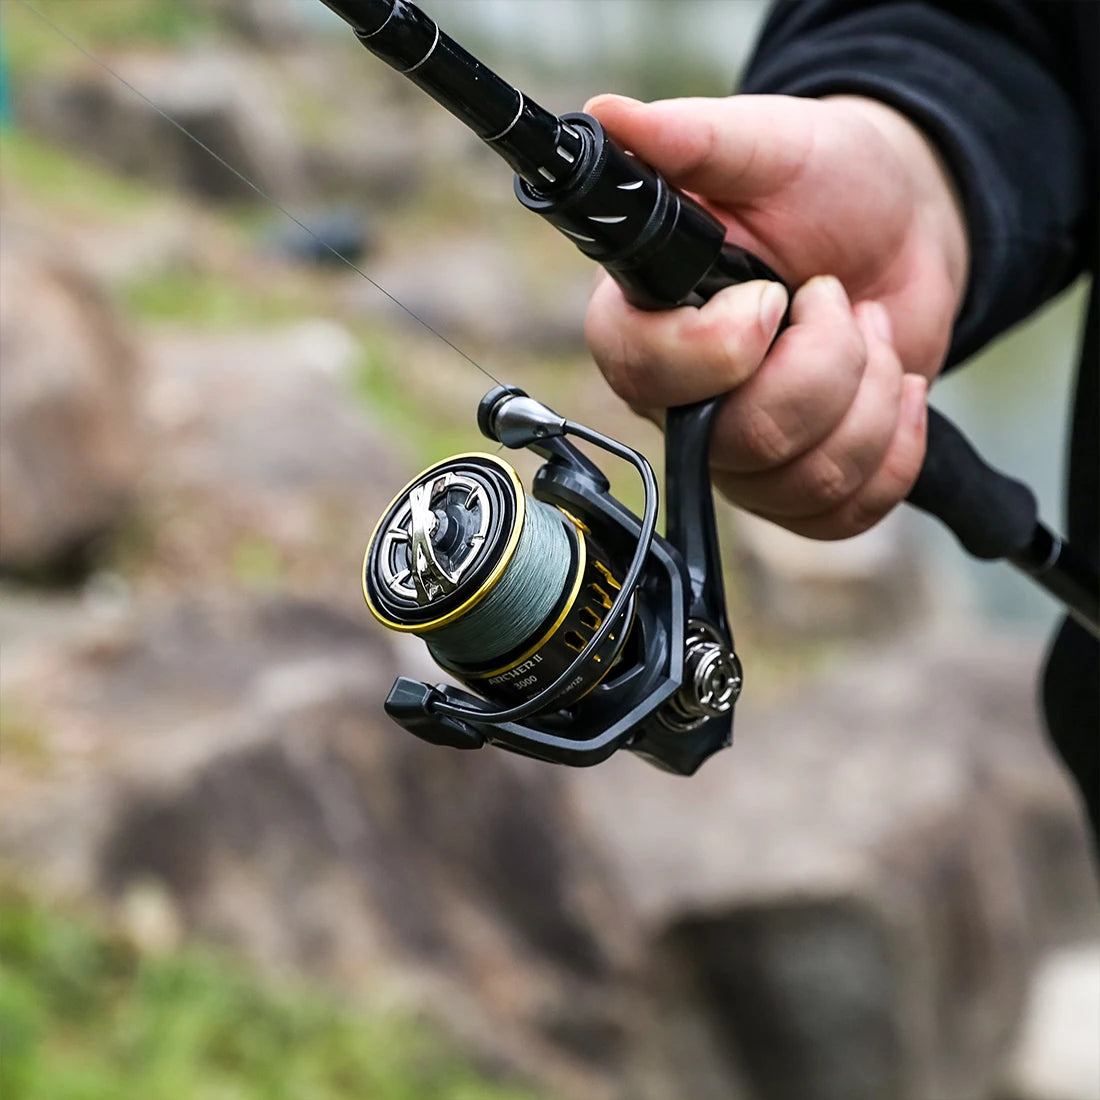 SeaKnight Brand ARCHER2 Series Fishing Reel 5.2:1 4.9:1 MAX Drag Power 28lbs Aluminum Spool Fish Alarm Spinning Reel 2000-6000